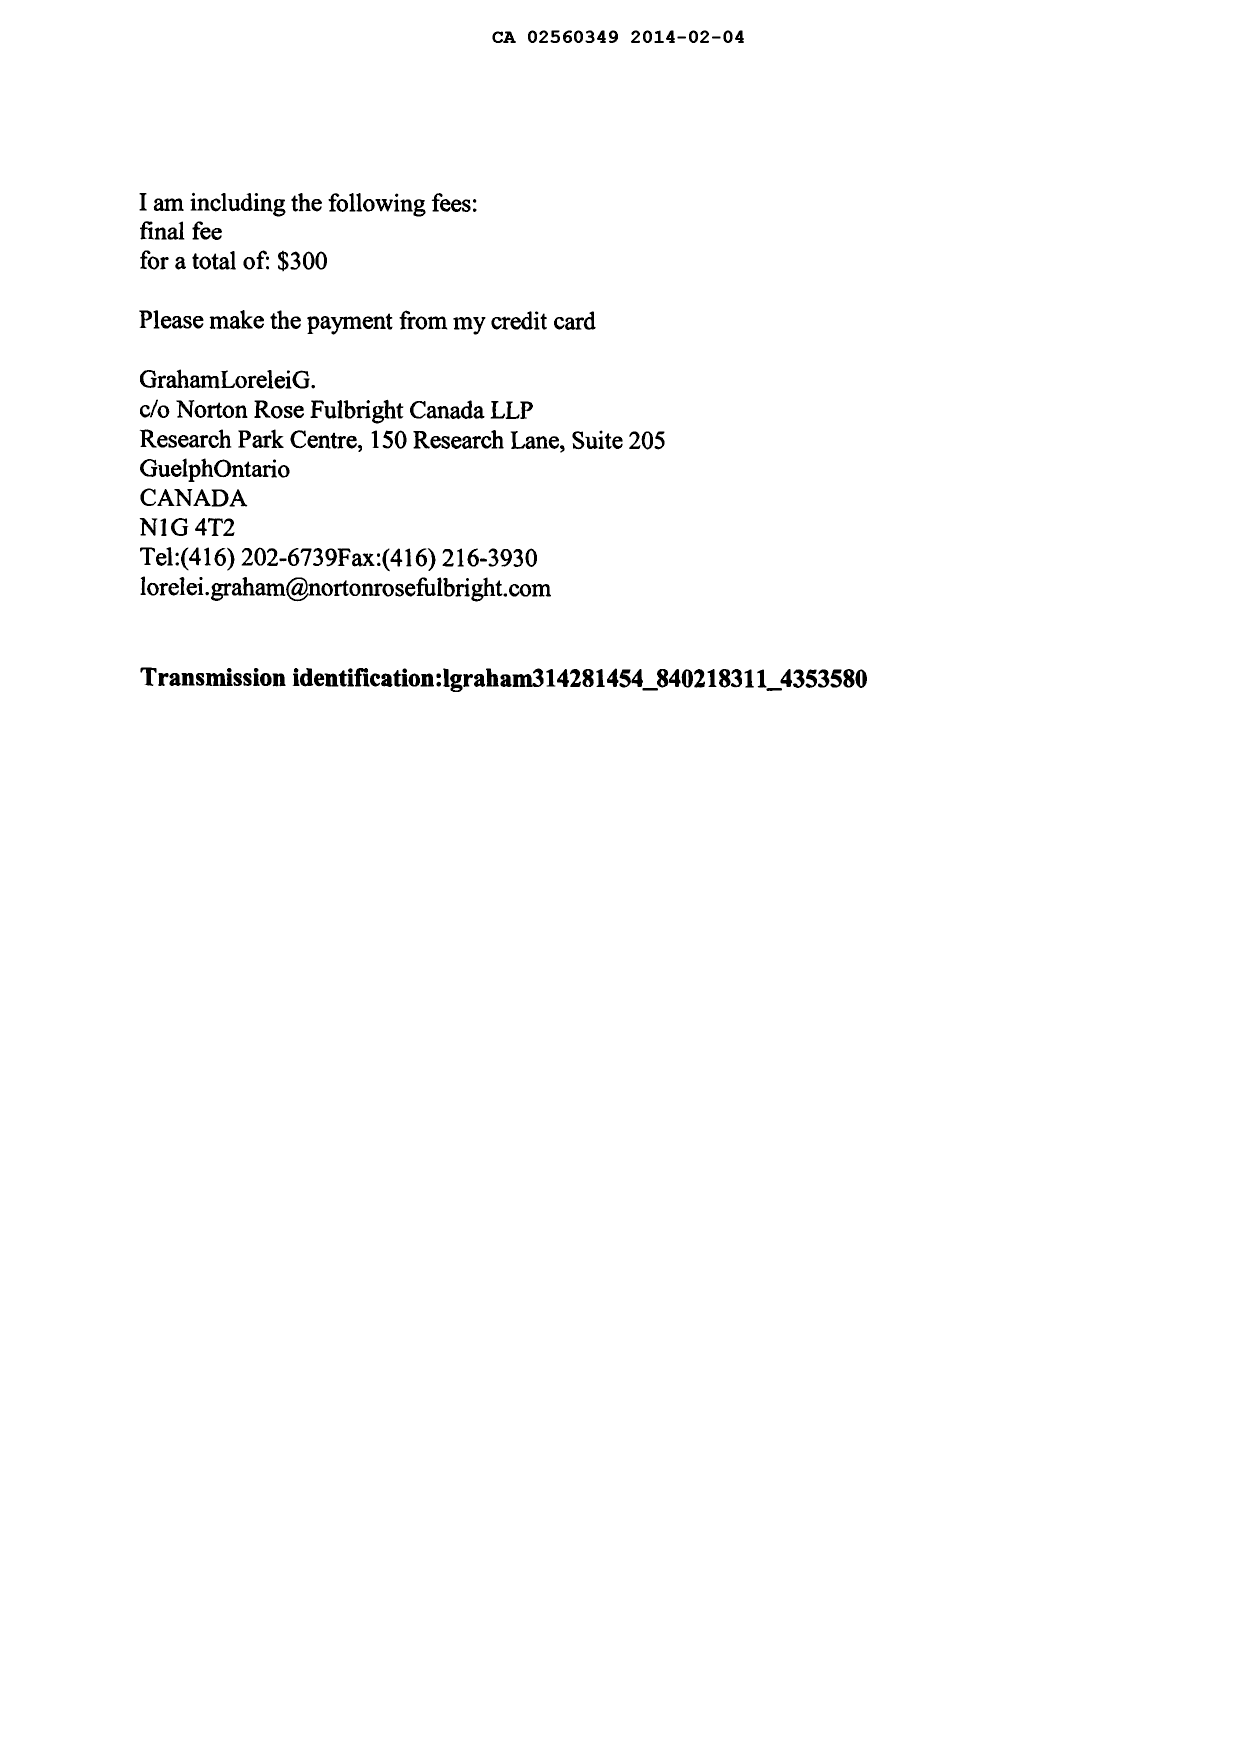 Canadian Patent Document 2560349. Correspondence 20131204. Image 2 of 6